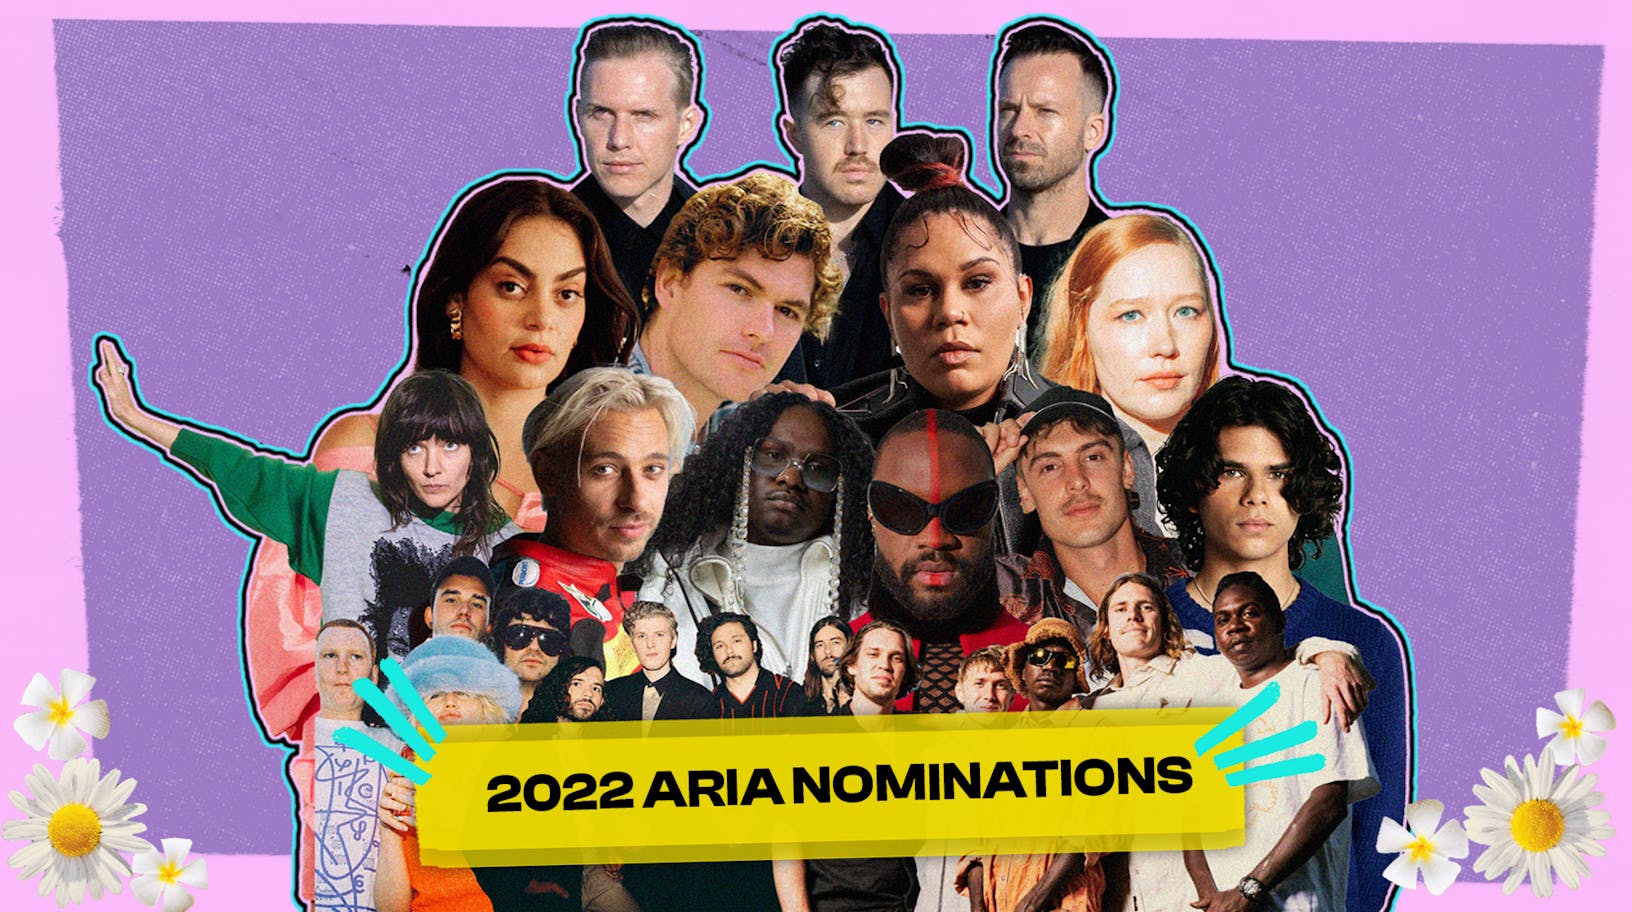 ARIA Awards 2022